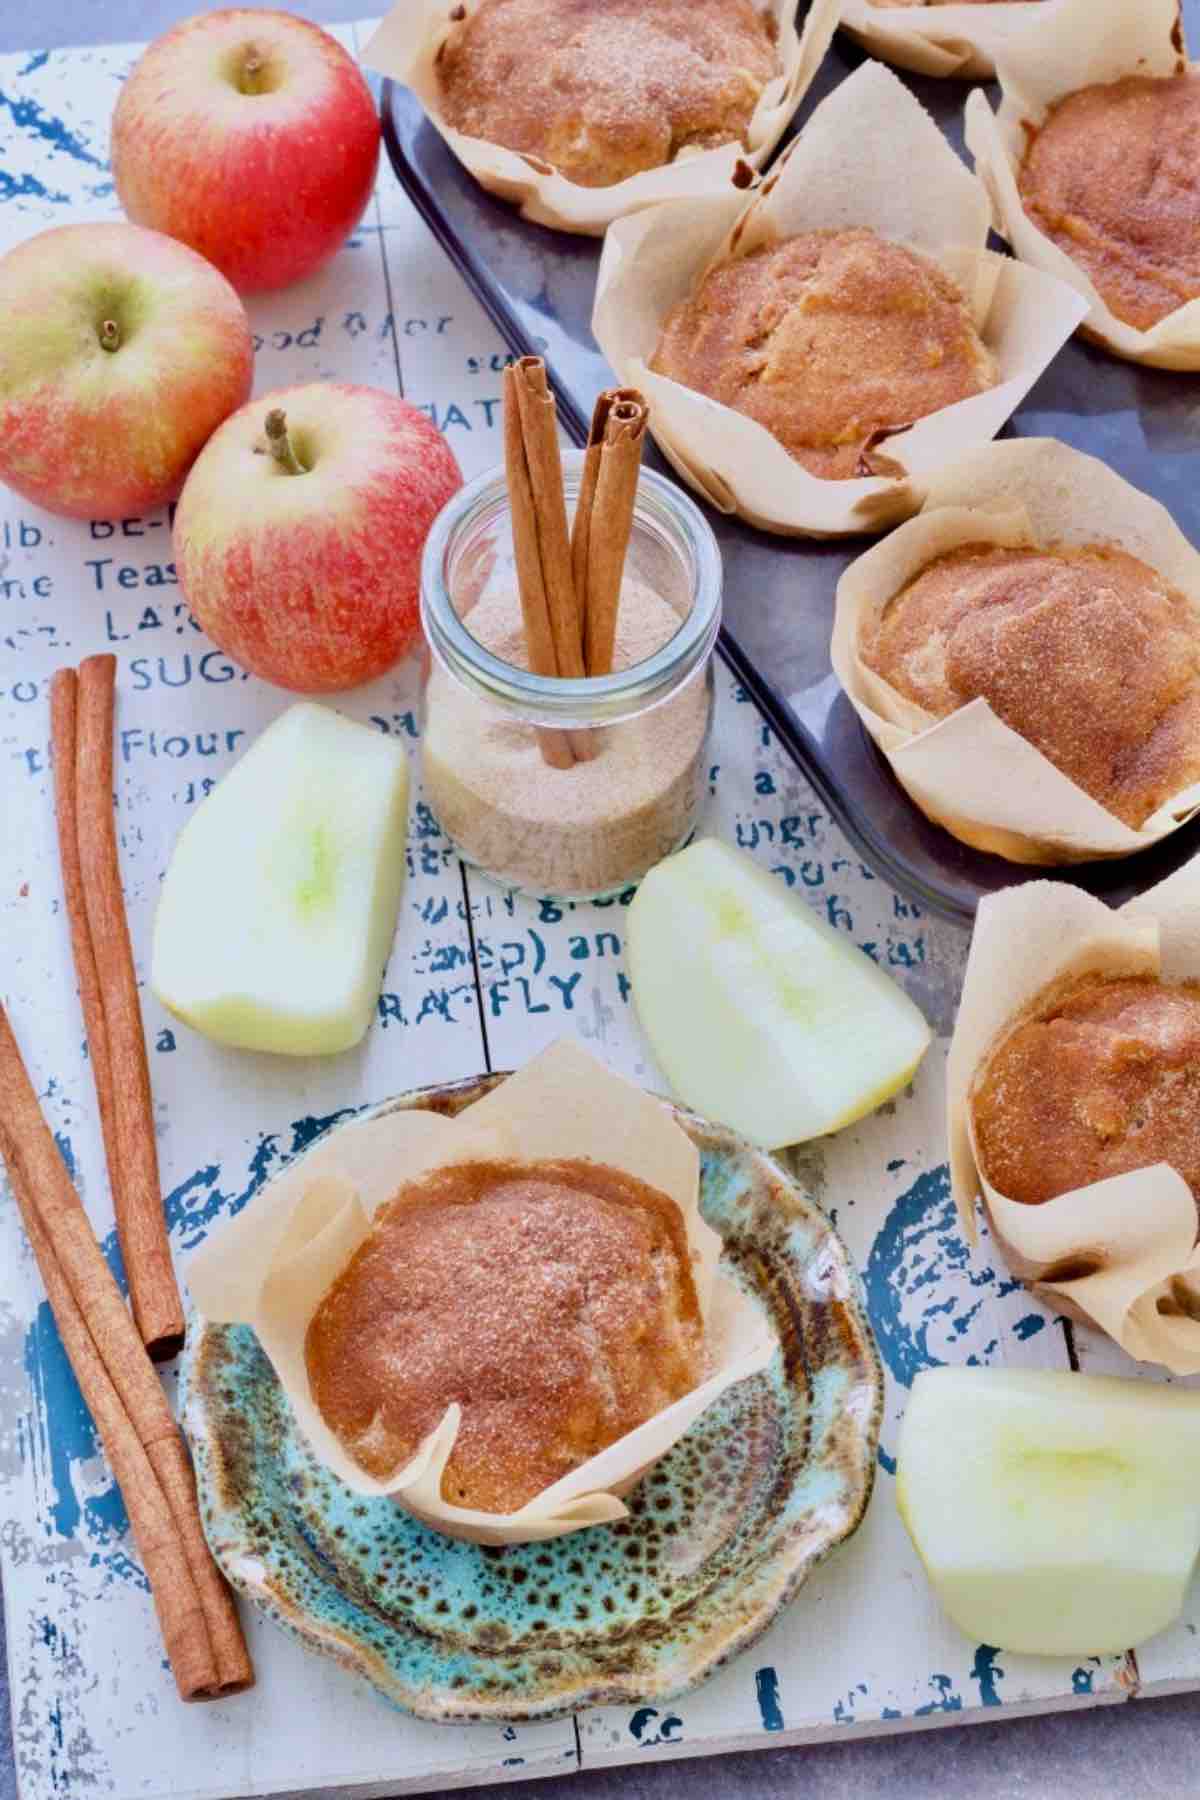 Apple and cinnamon muffins amongst apples and cinnamon sticks.